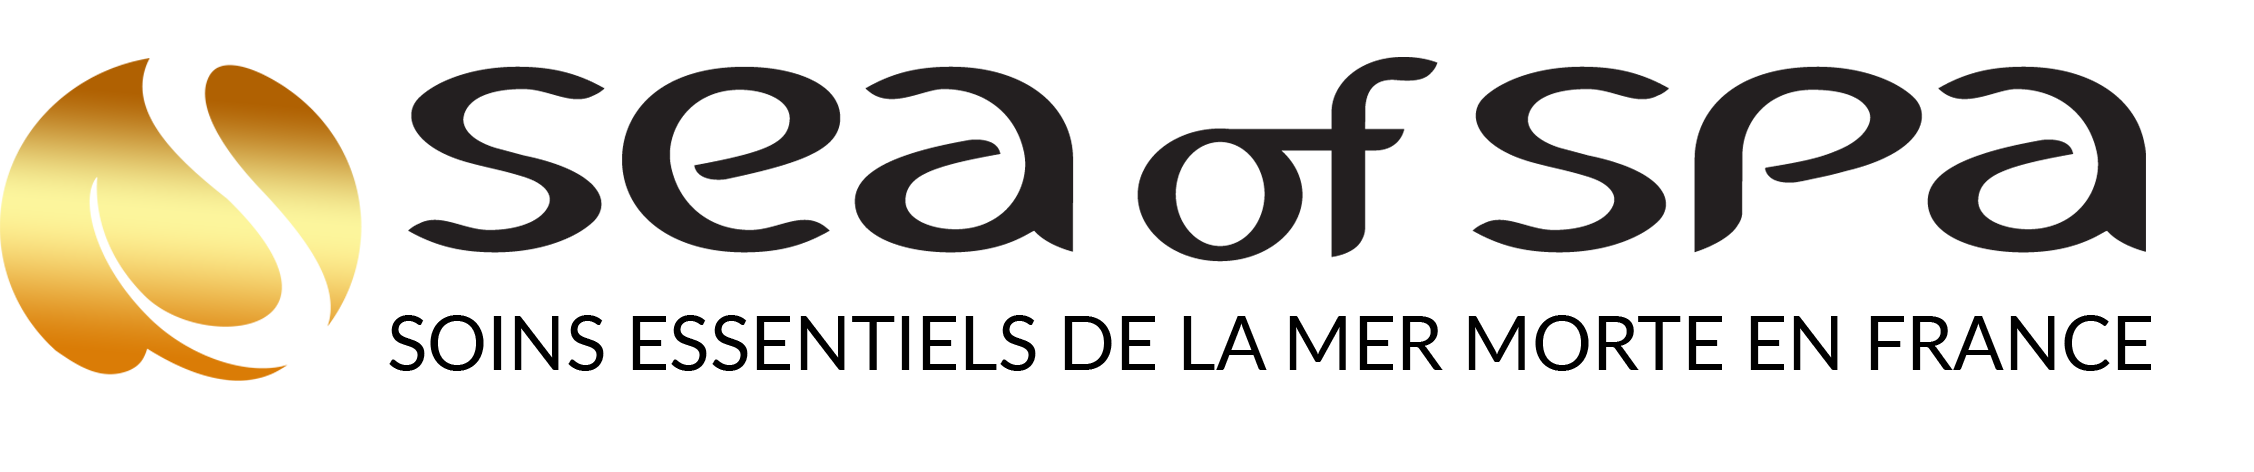 Logo Sea of spa France